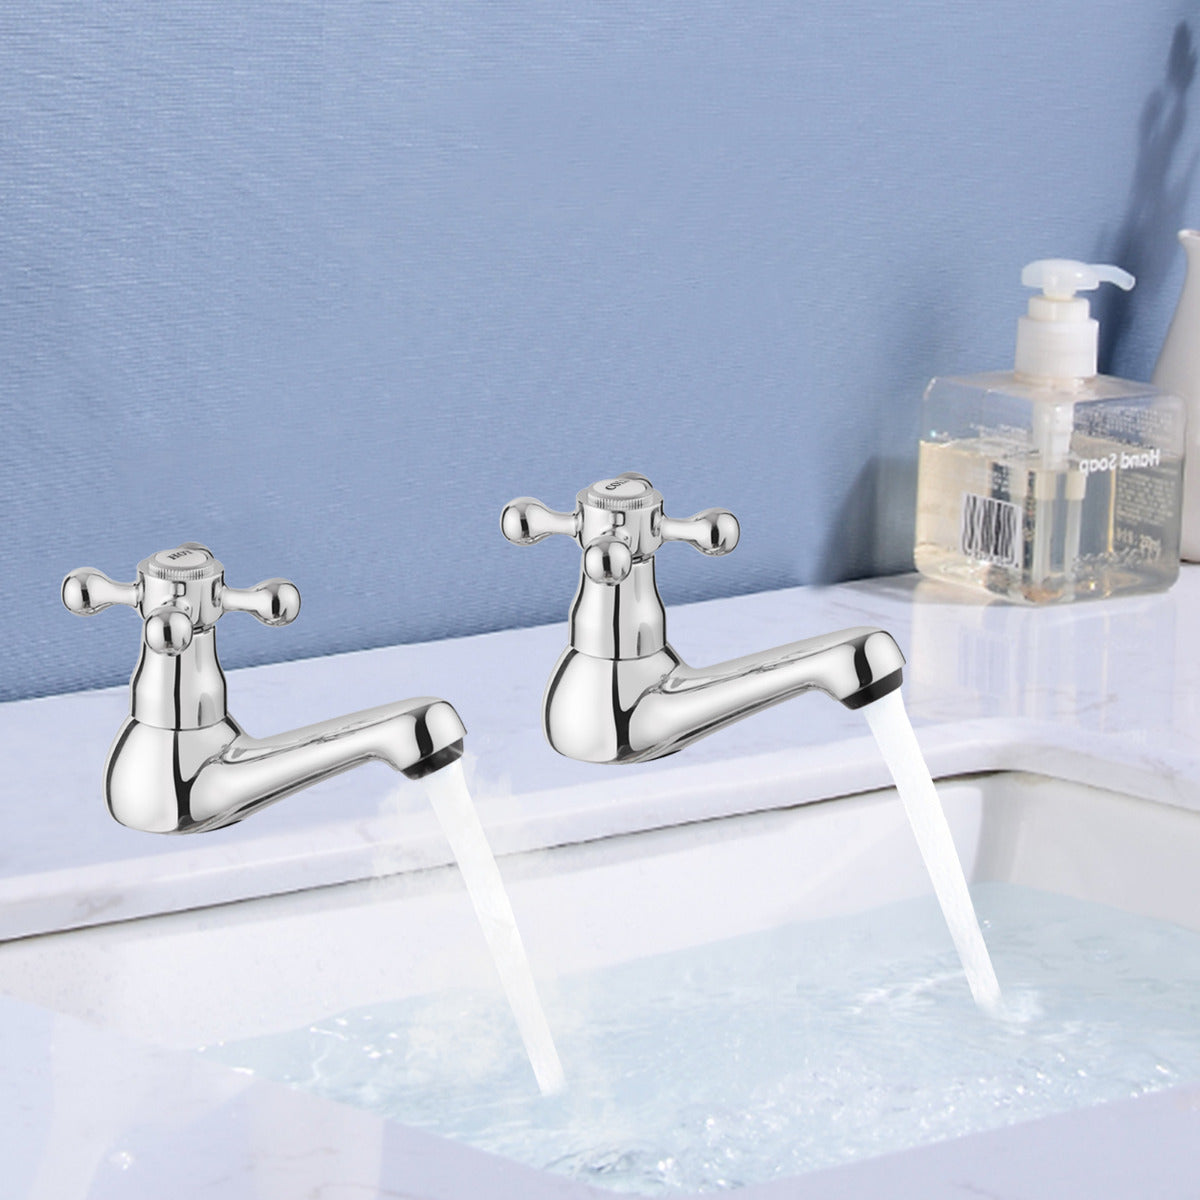 JassferryJASSFERRY New Traditional Twin Basin Hot & Cold Taps Bath Sink Cross HandleBasin Taps